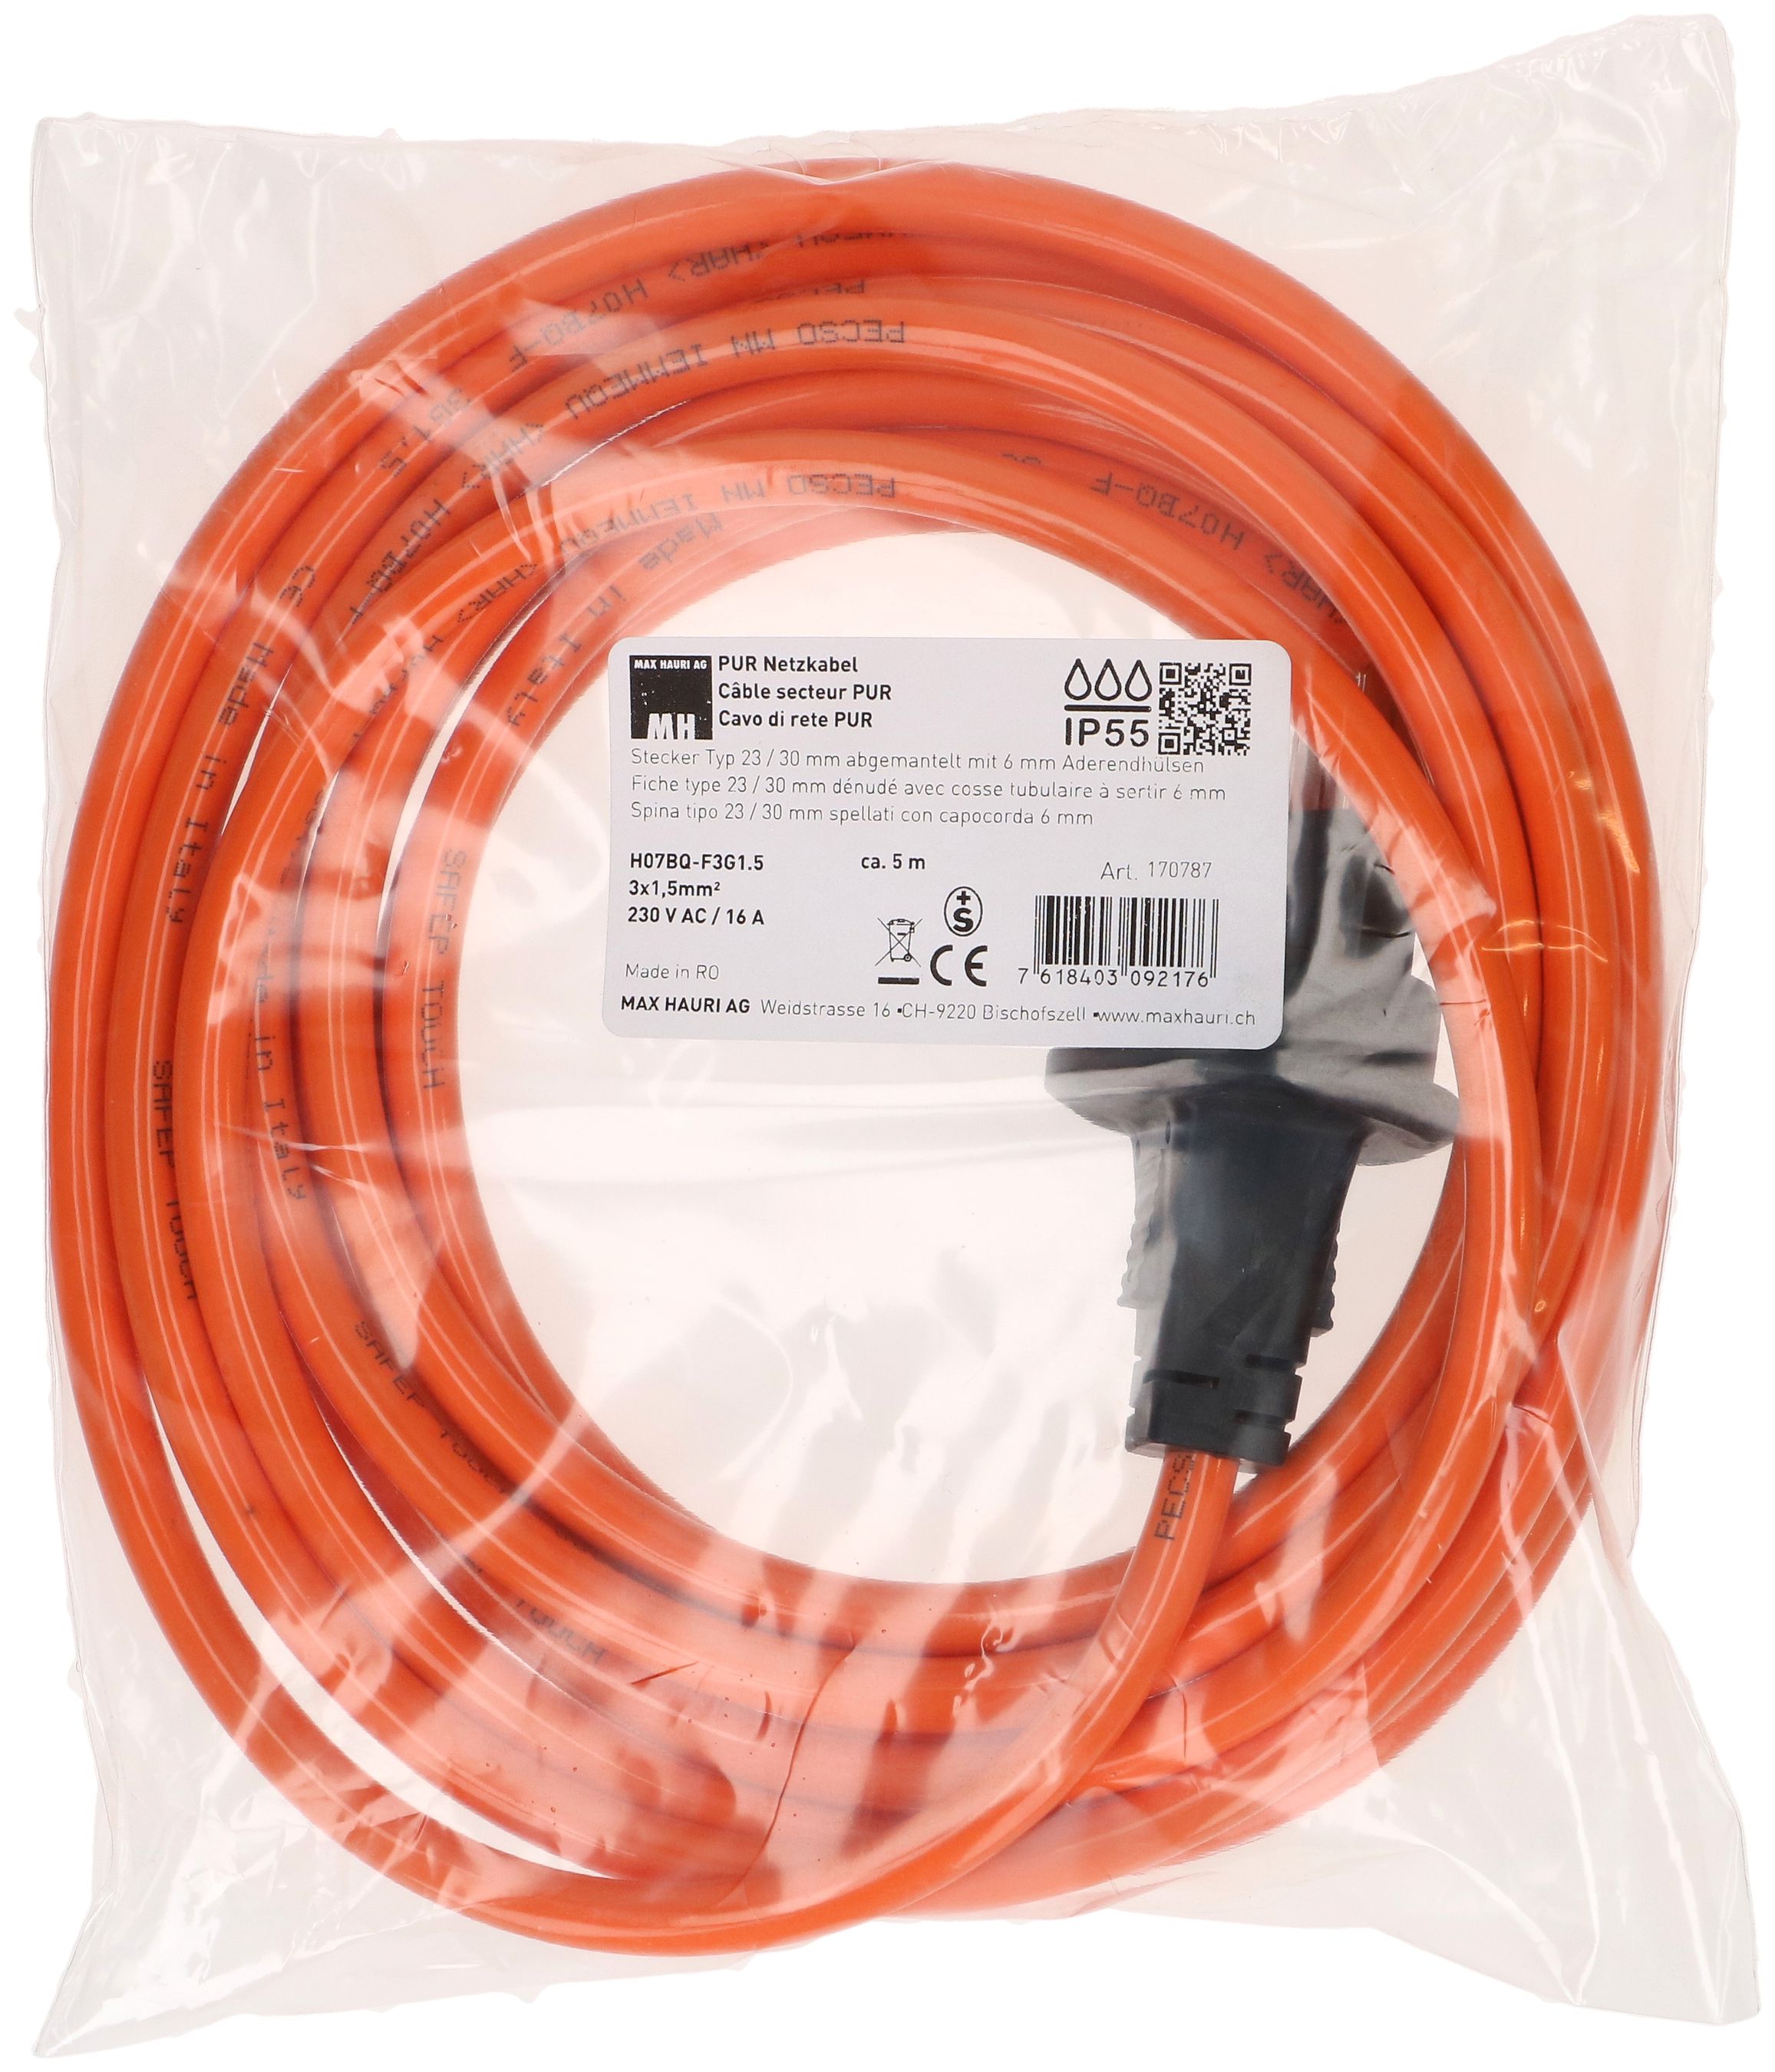 PUR câble secteur H07BQ-F3G1.5mm2 5m orange type 23 IP55